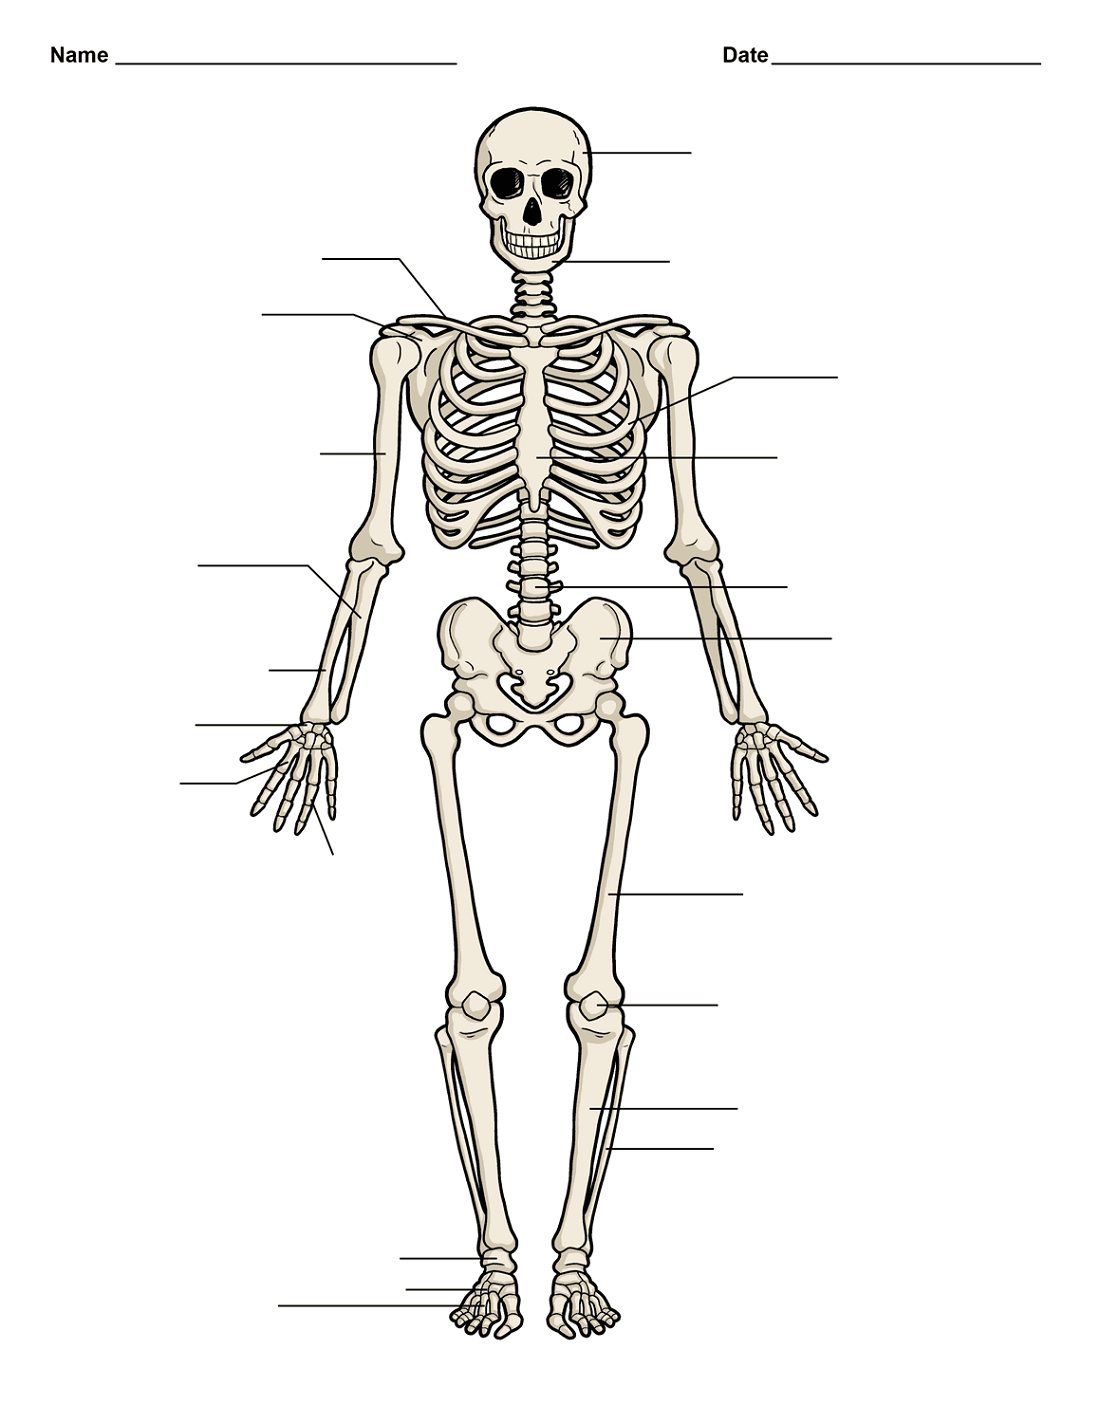 Diagram Of Human Organs Human Diagrams Body Skull And Organs Printable Diagram